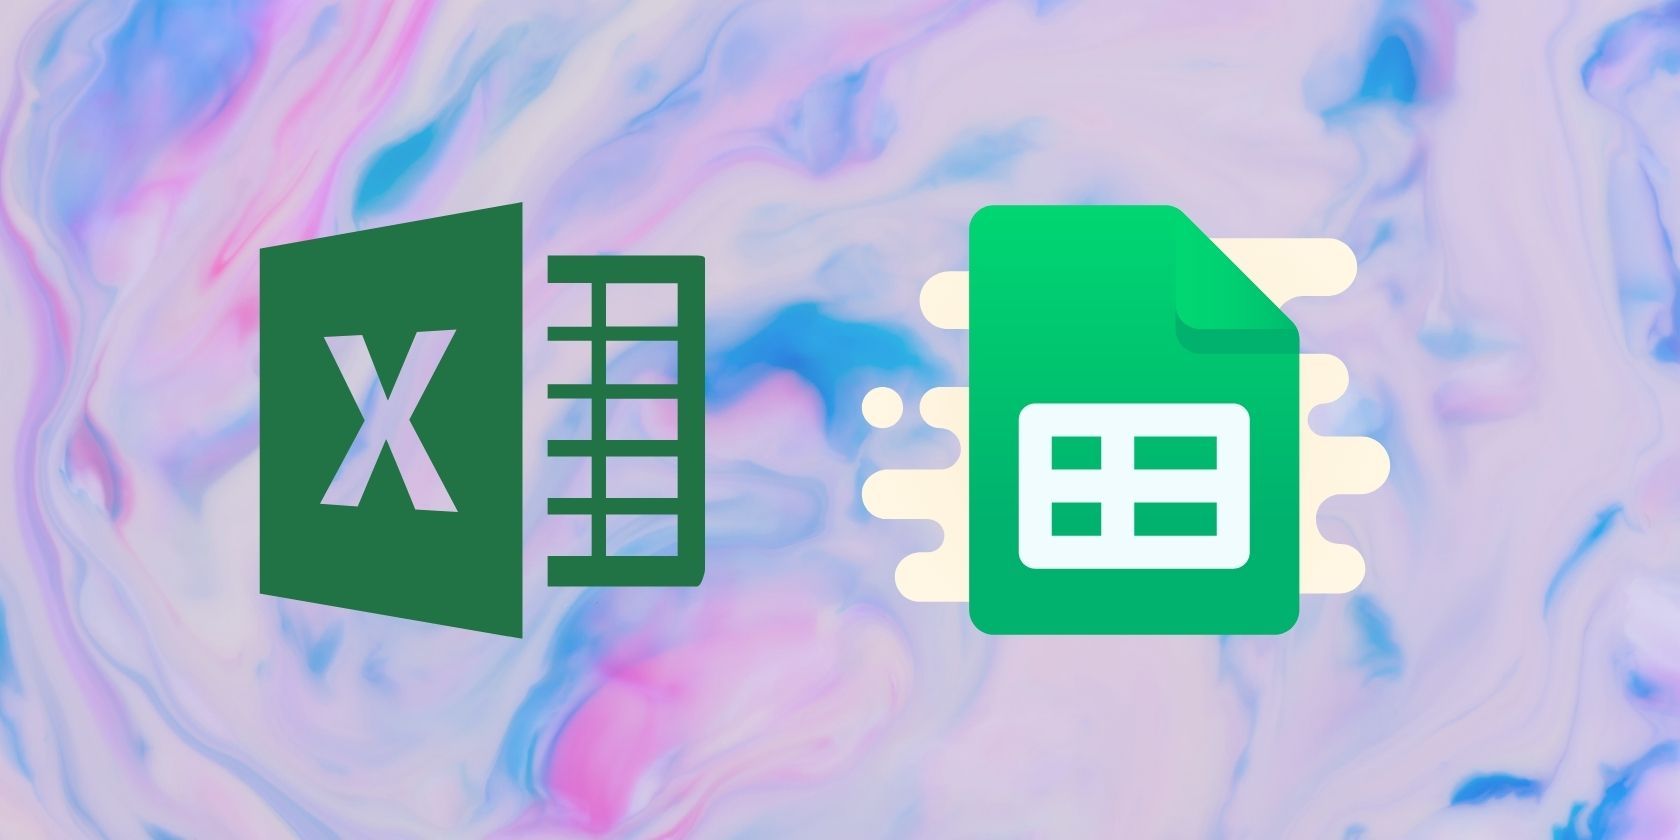 Image of Microsoft Excel Logo Next to Google Sheets Logo